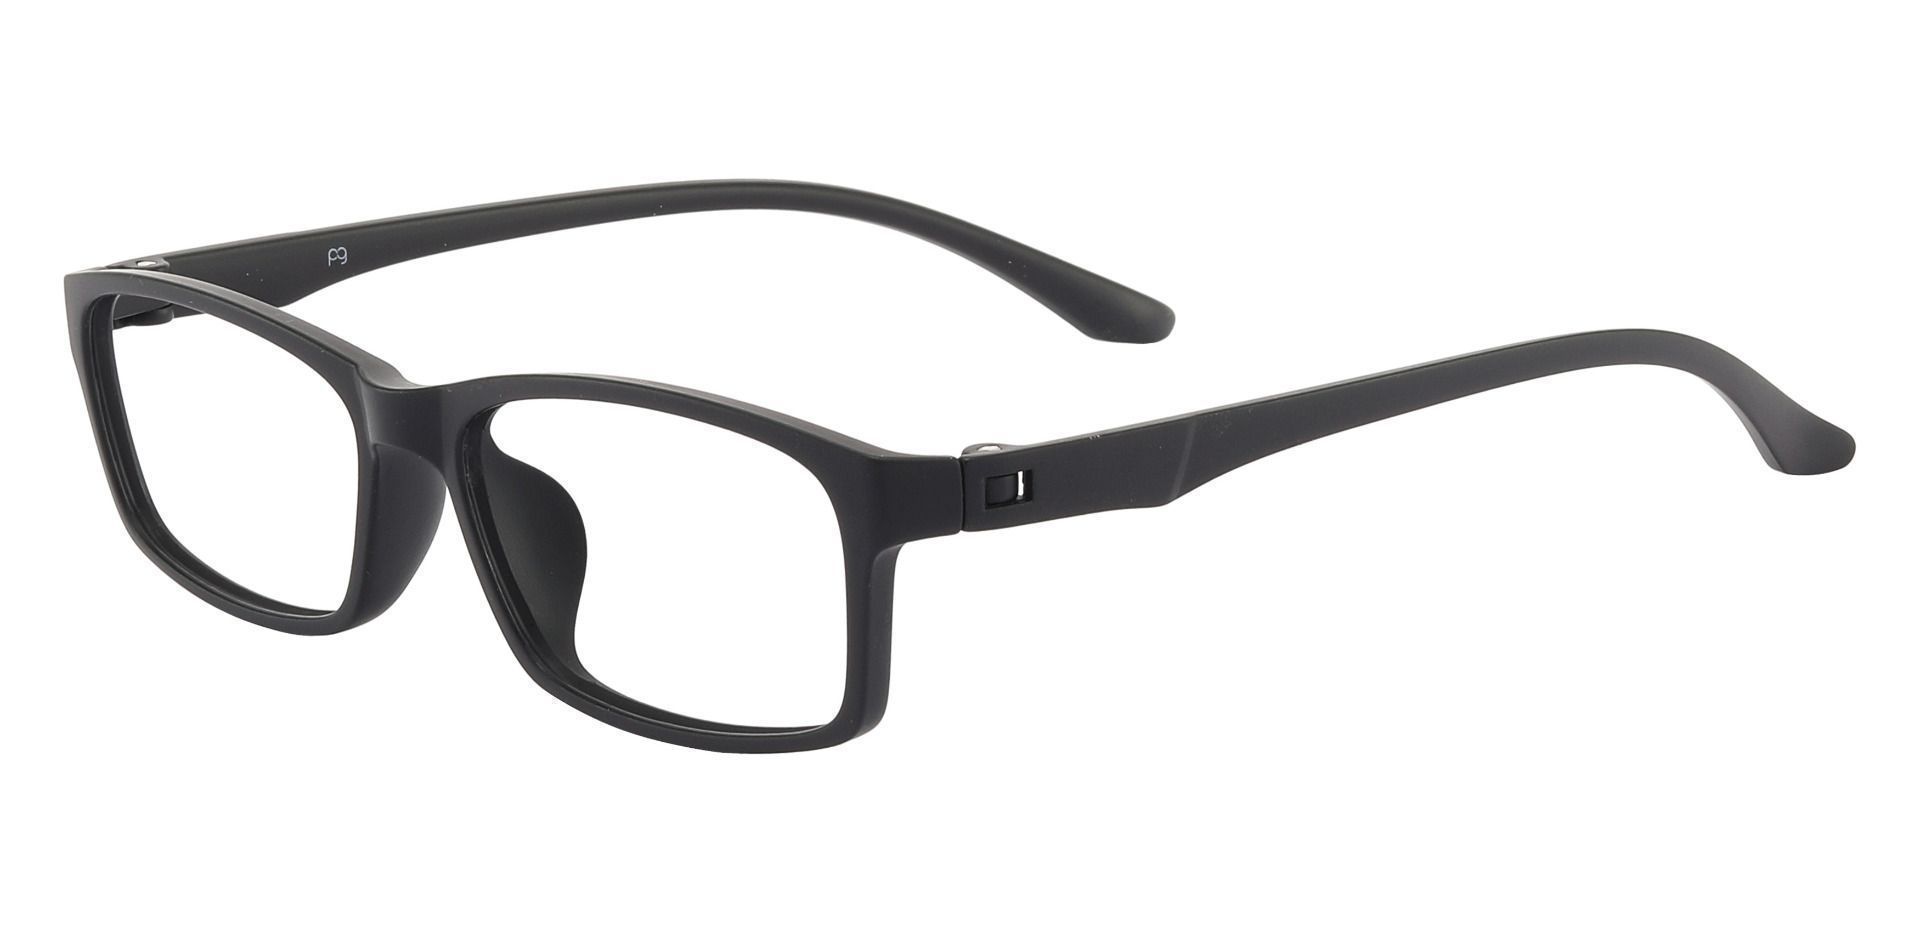 Poplar Rectangle Progressive Glasses -   Matte Black     